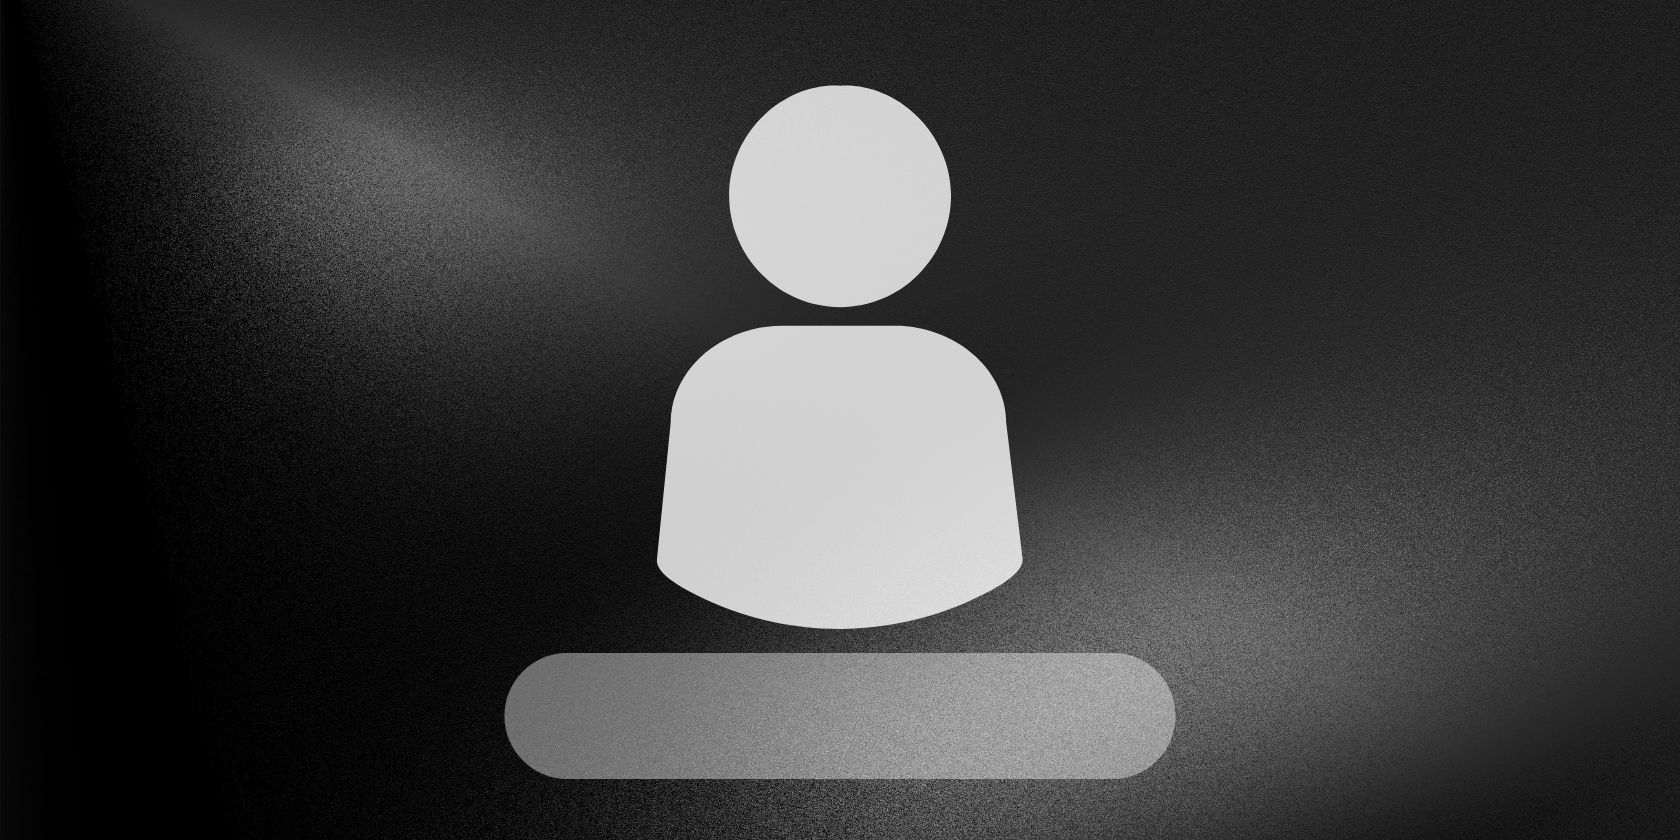 Username icons seen on dark background 